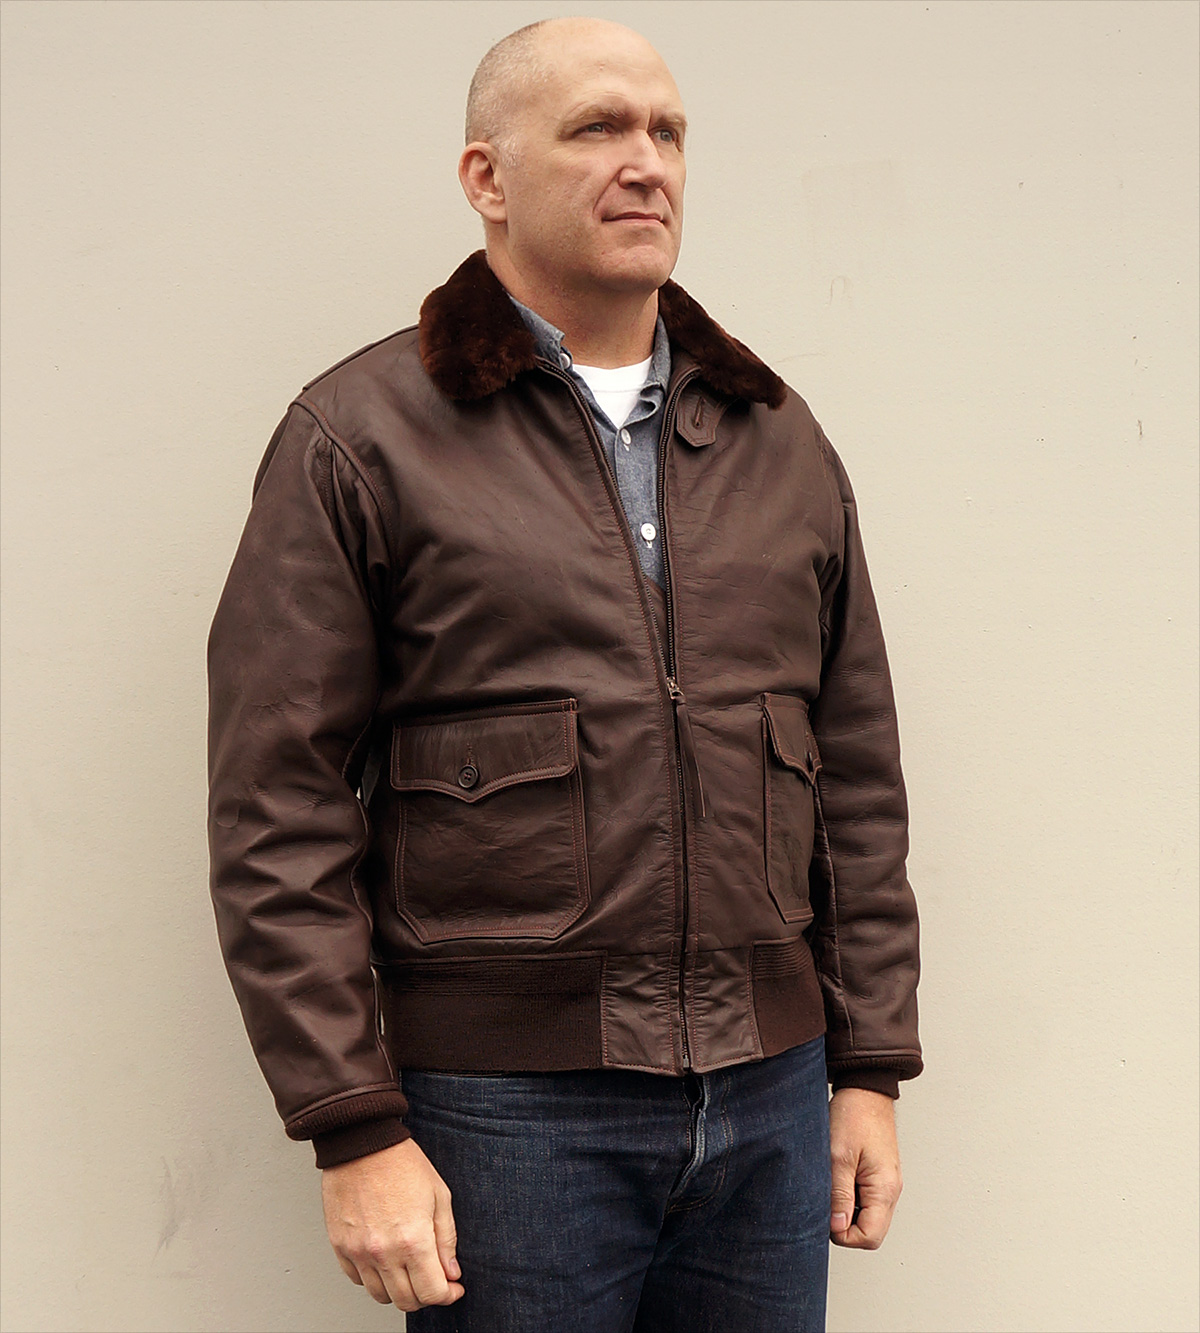 GW USN jacket choices | Vintage Leather Jackets Forum